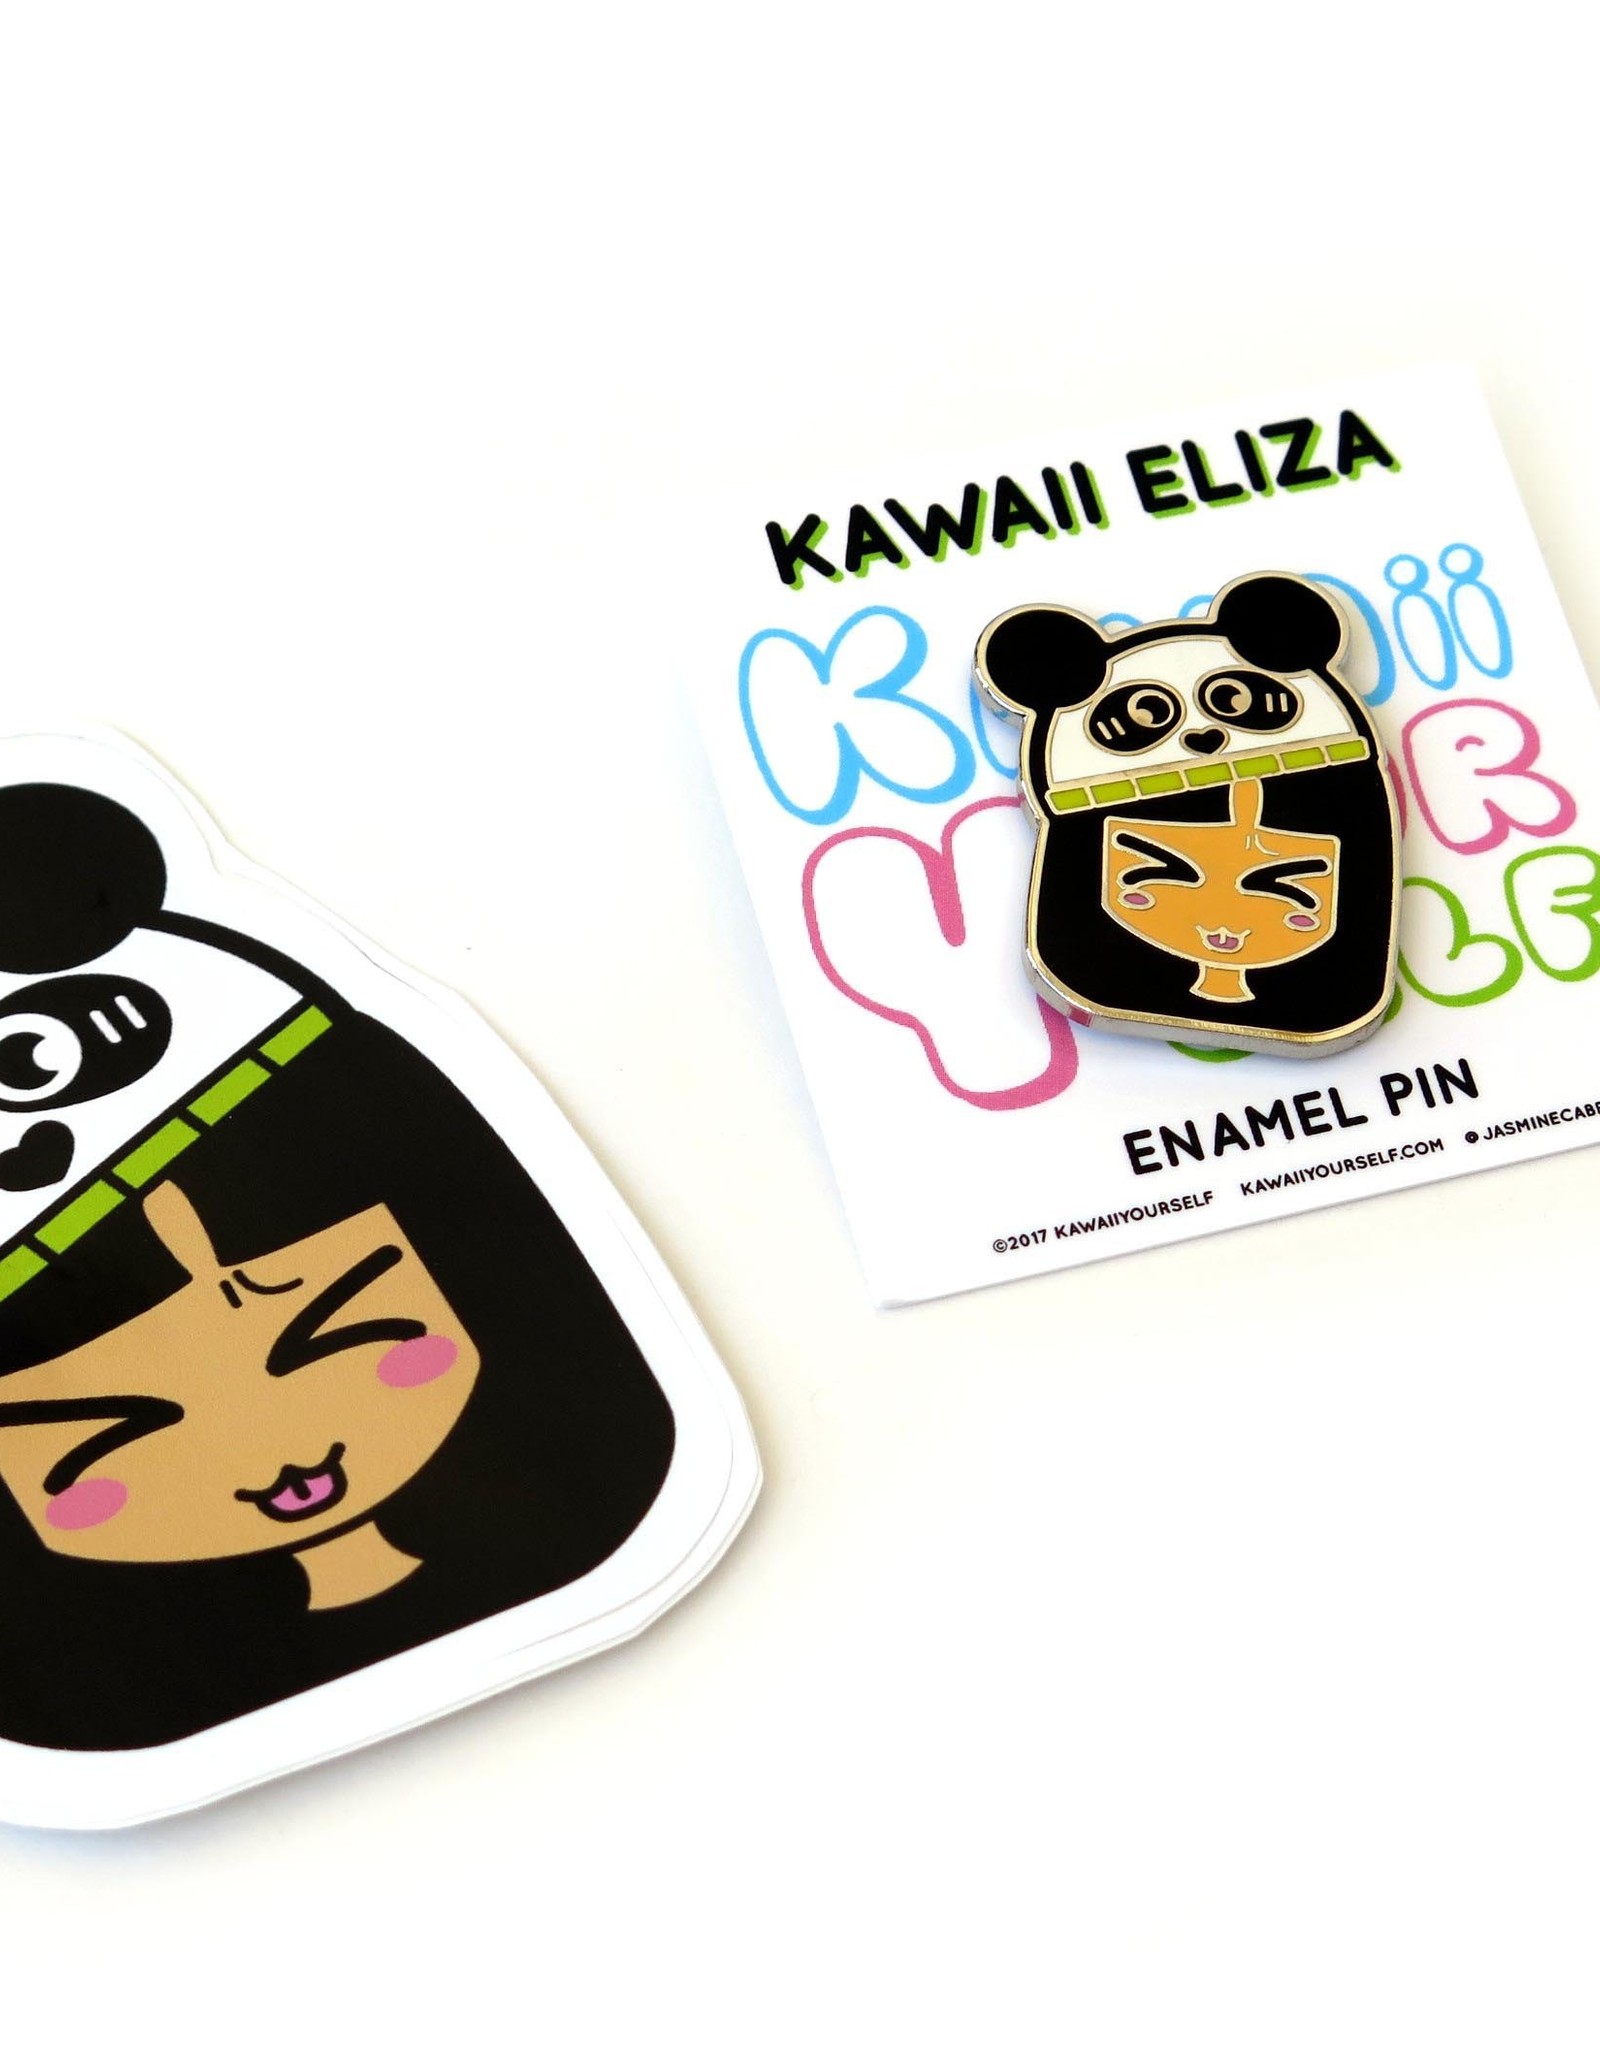 Jasmine Cabral Kawaii Eliza Enamel Pin with Sticker by Jasmine Cabral